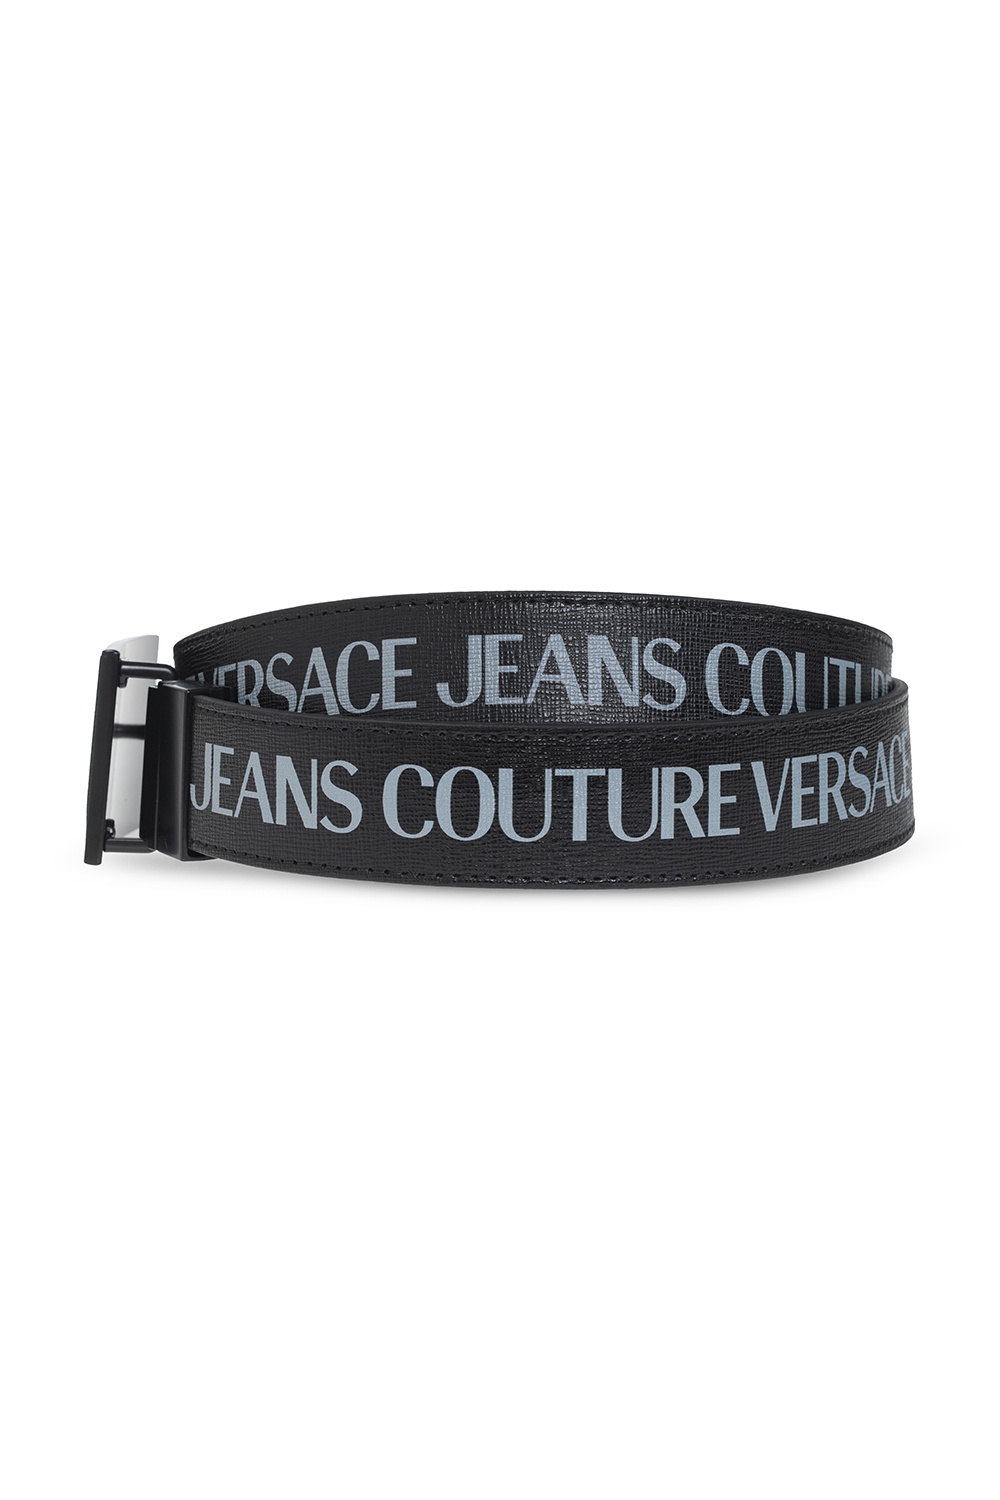 Versace Jeans Couture Reversible belt